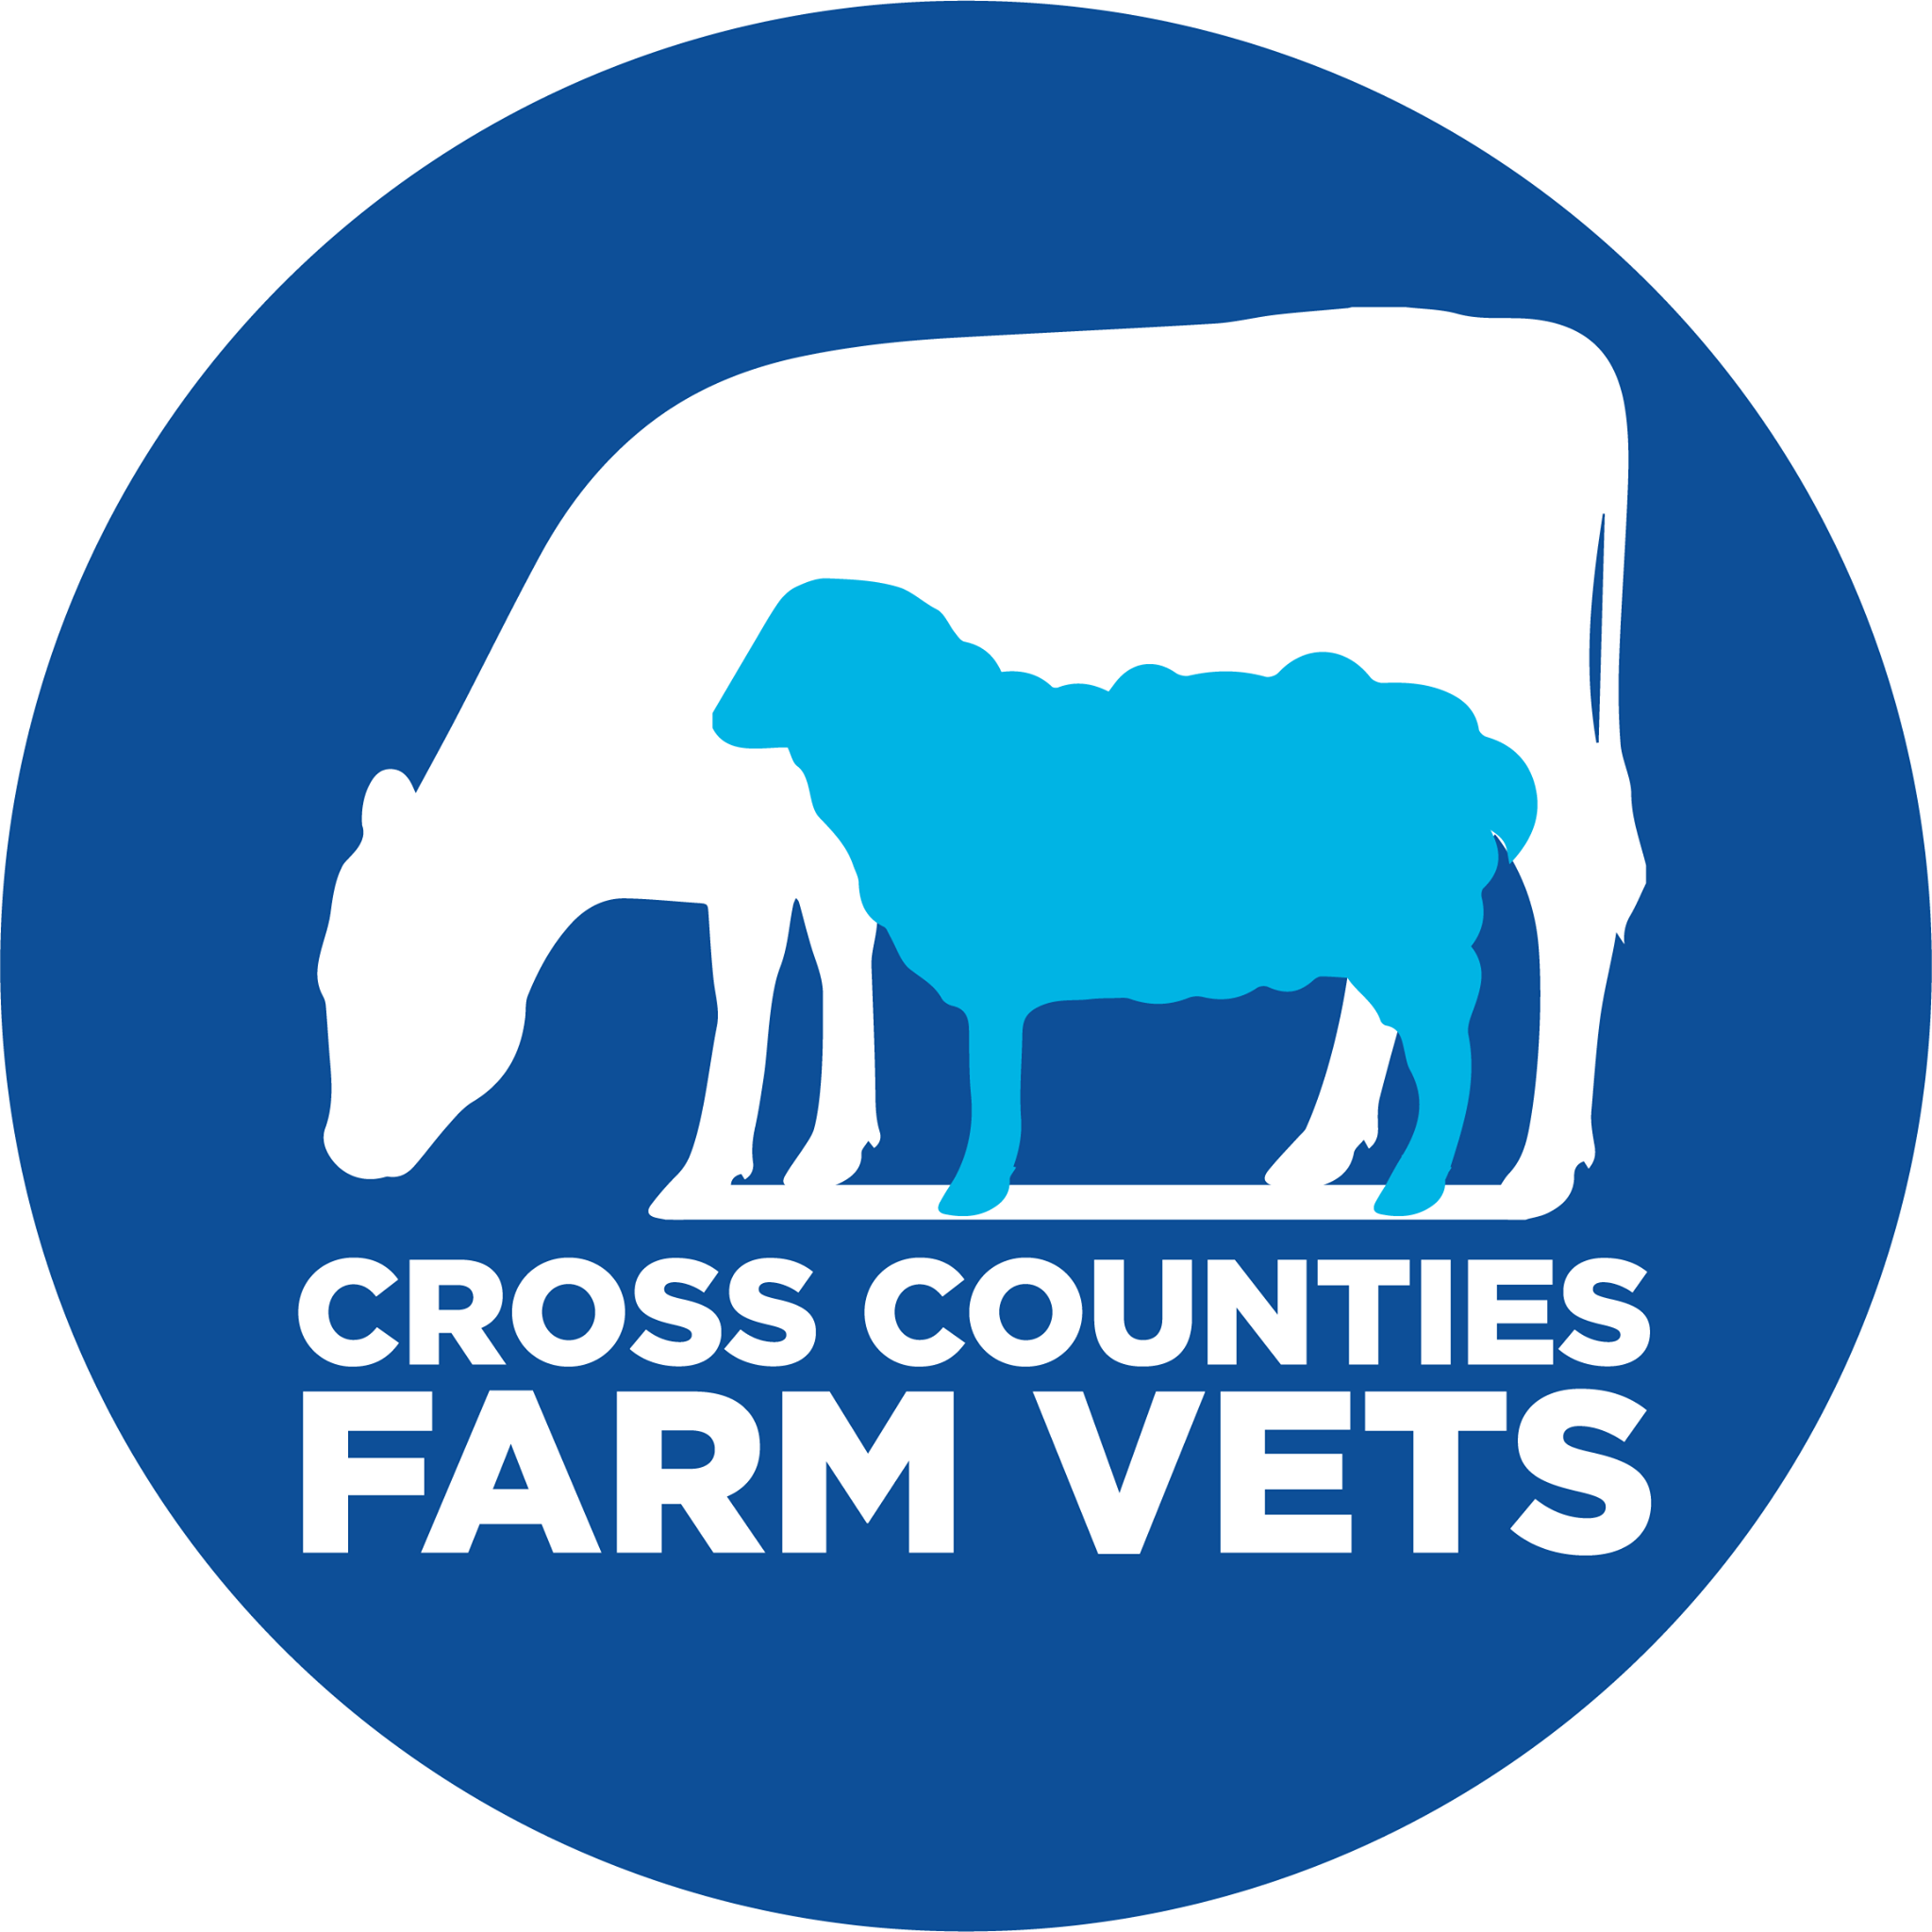 Cross Counties Farm Vets - Broughton Astley Logo